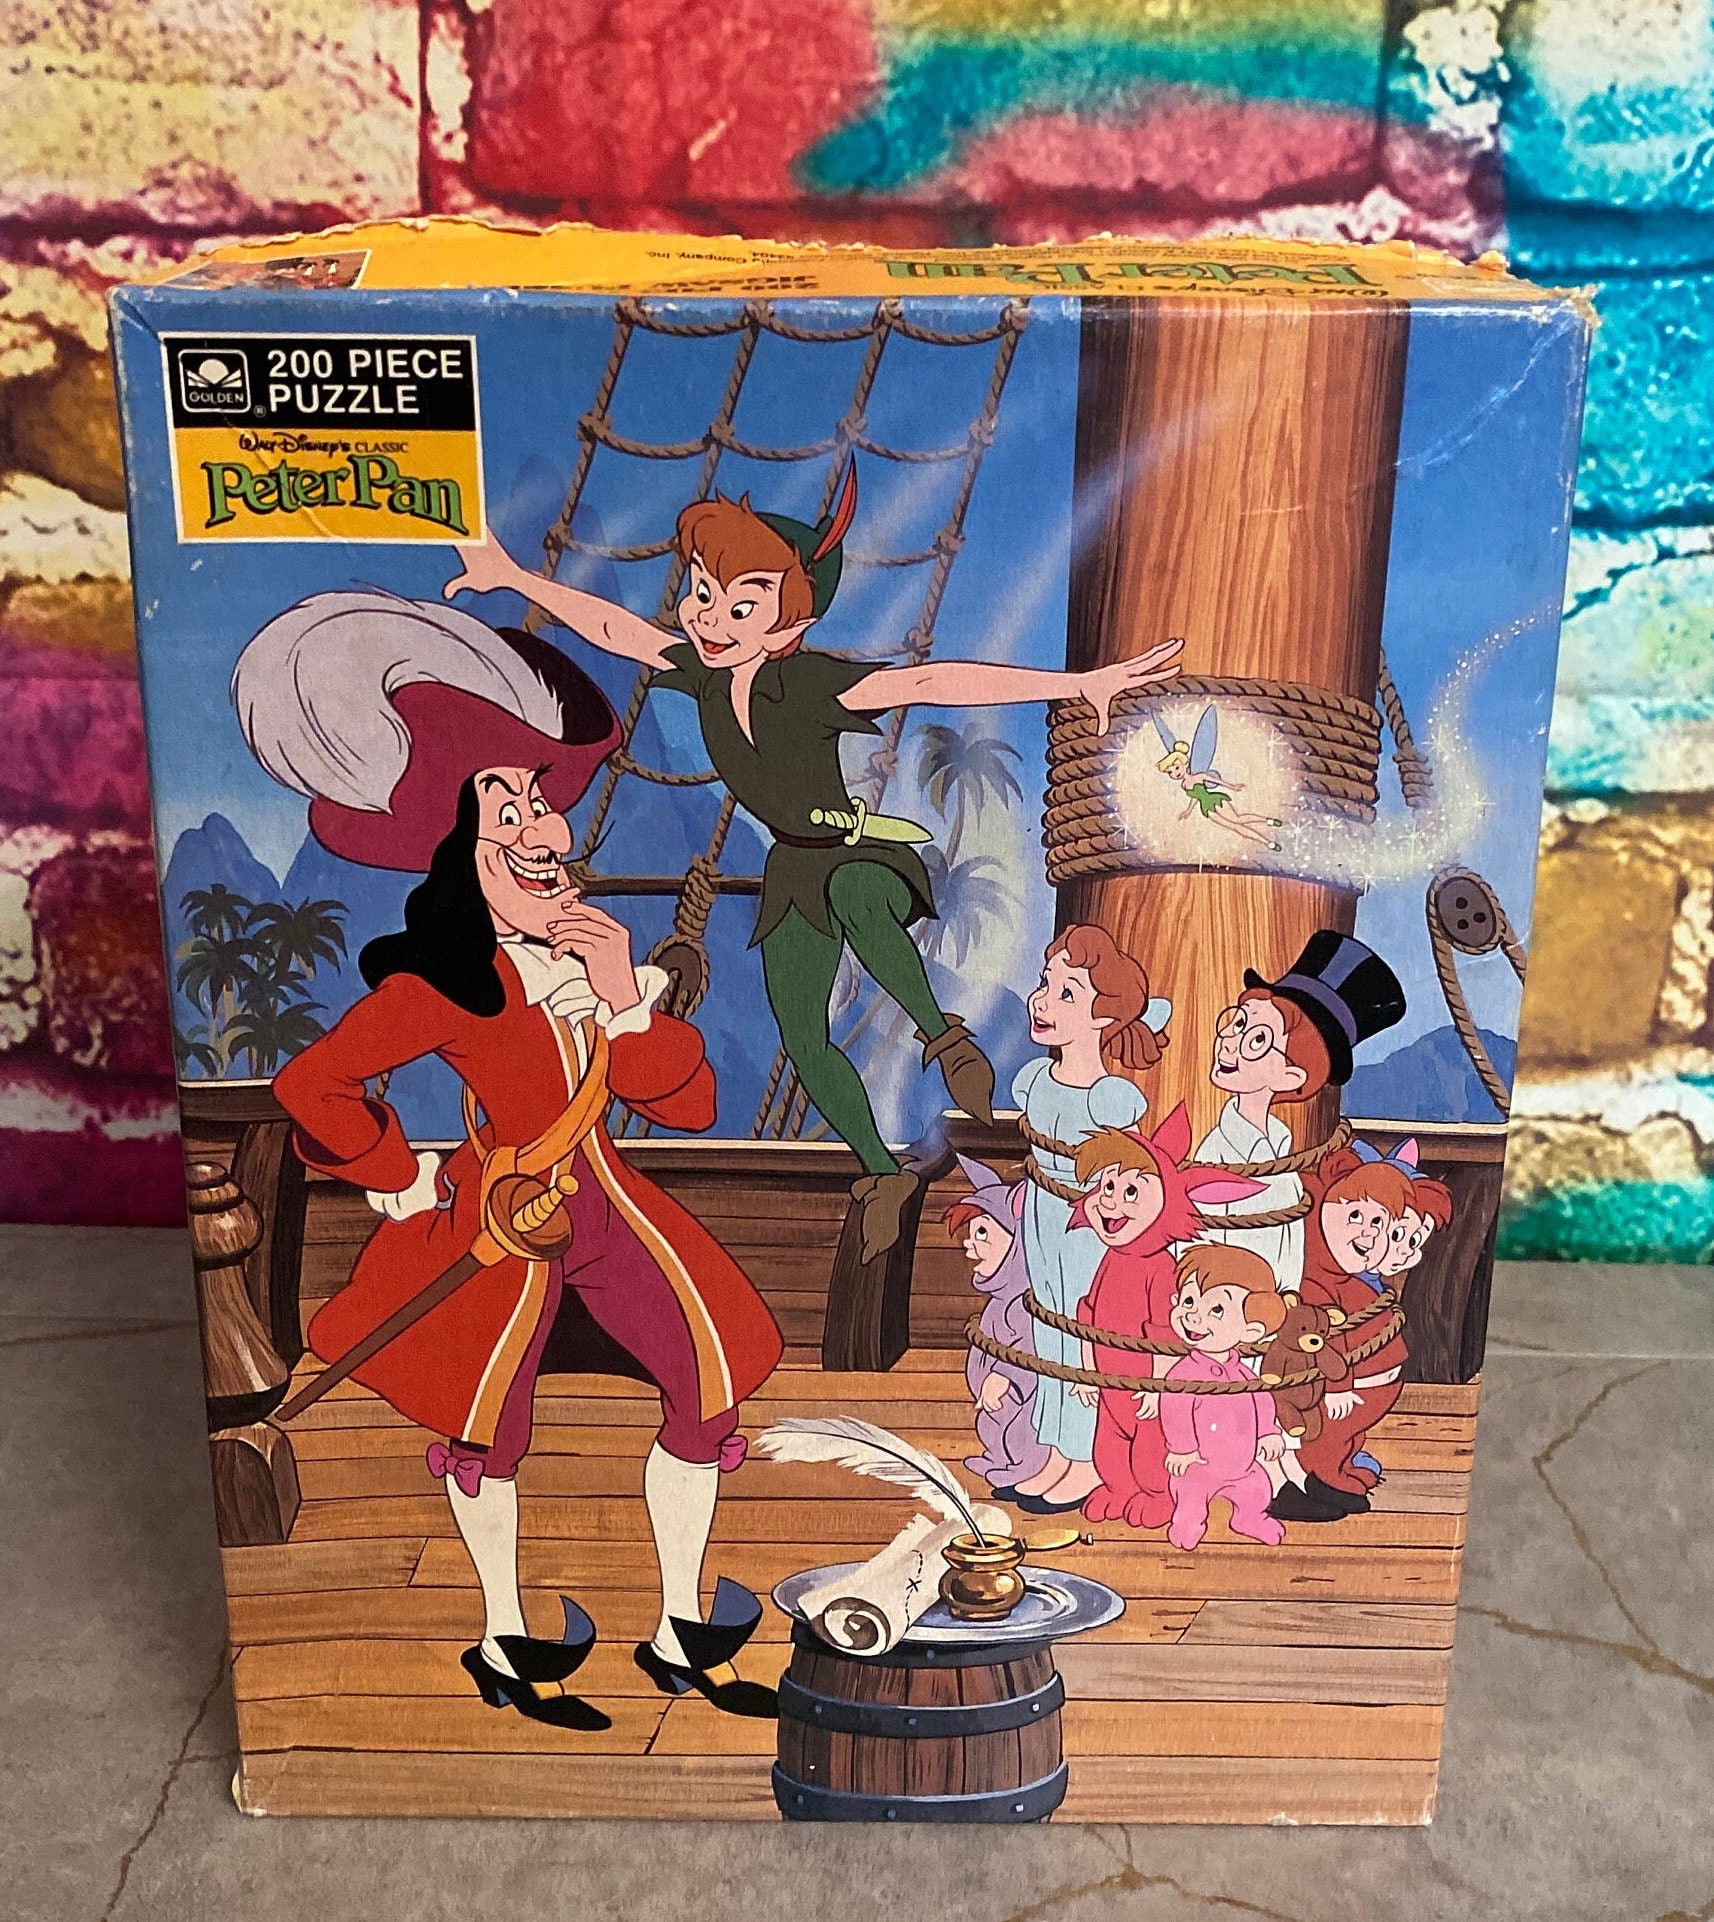 Disney Anime Peter Pan Wooden Jigsaw 35/300/500/1000 Pcs Puzzle